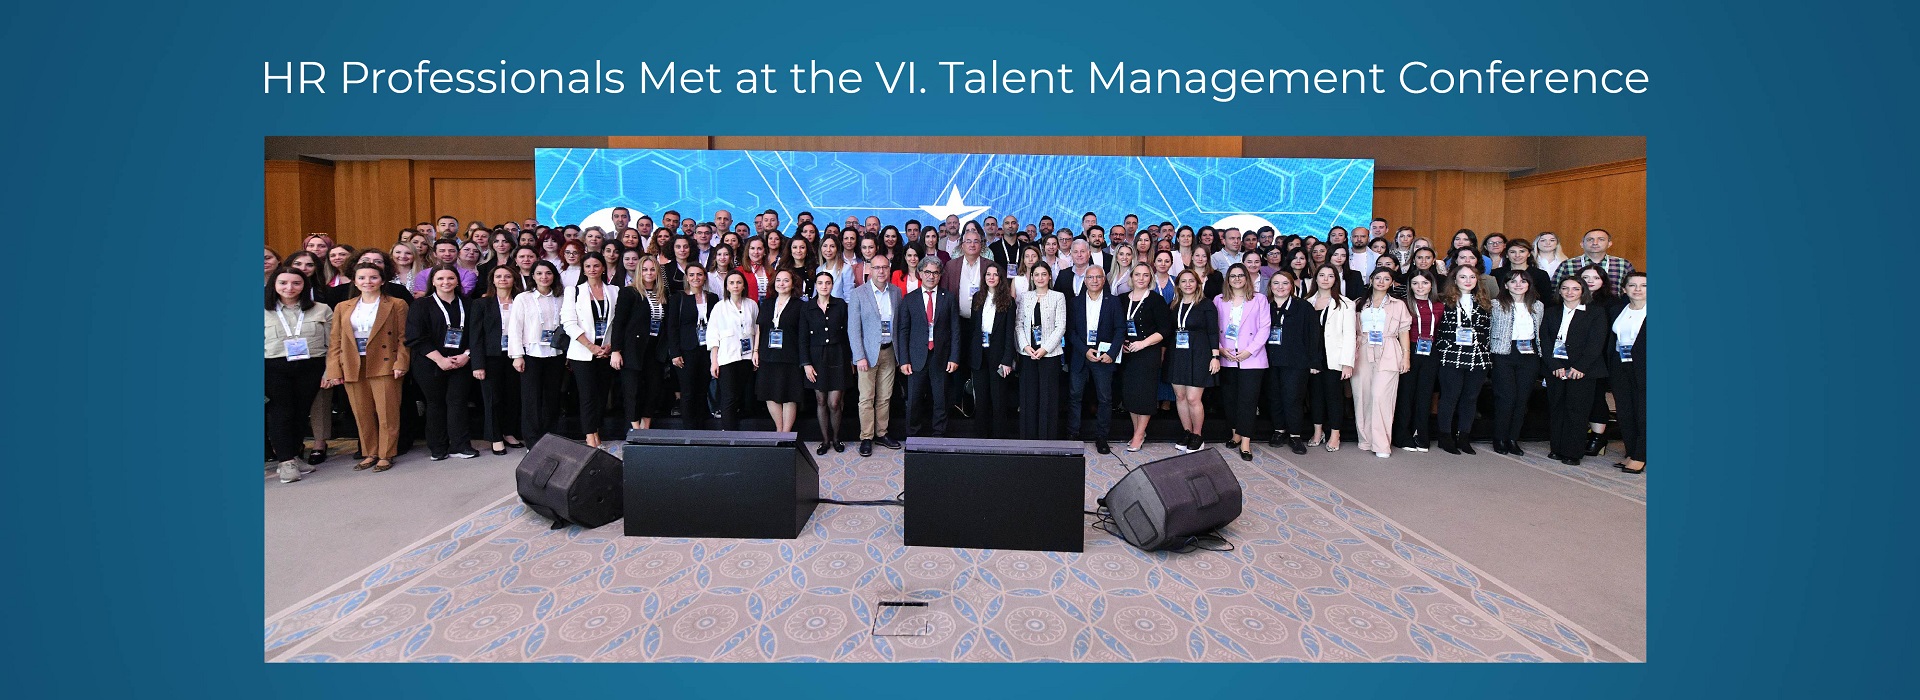 HR Professionals Met at the VI. Talent Management Conference